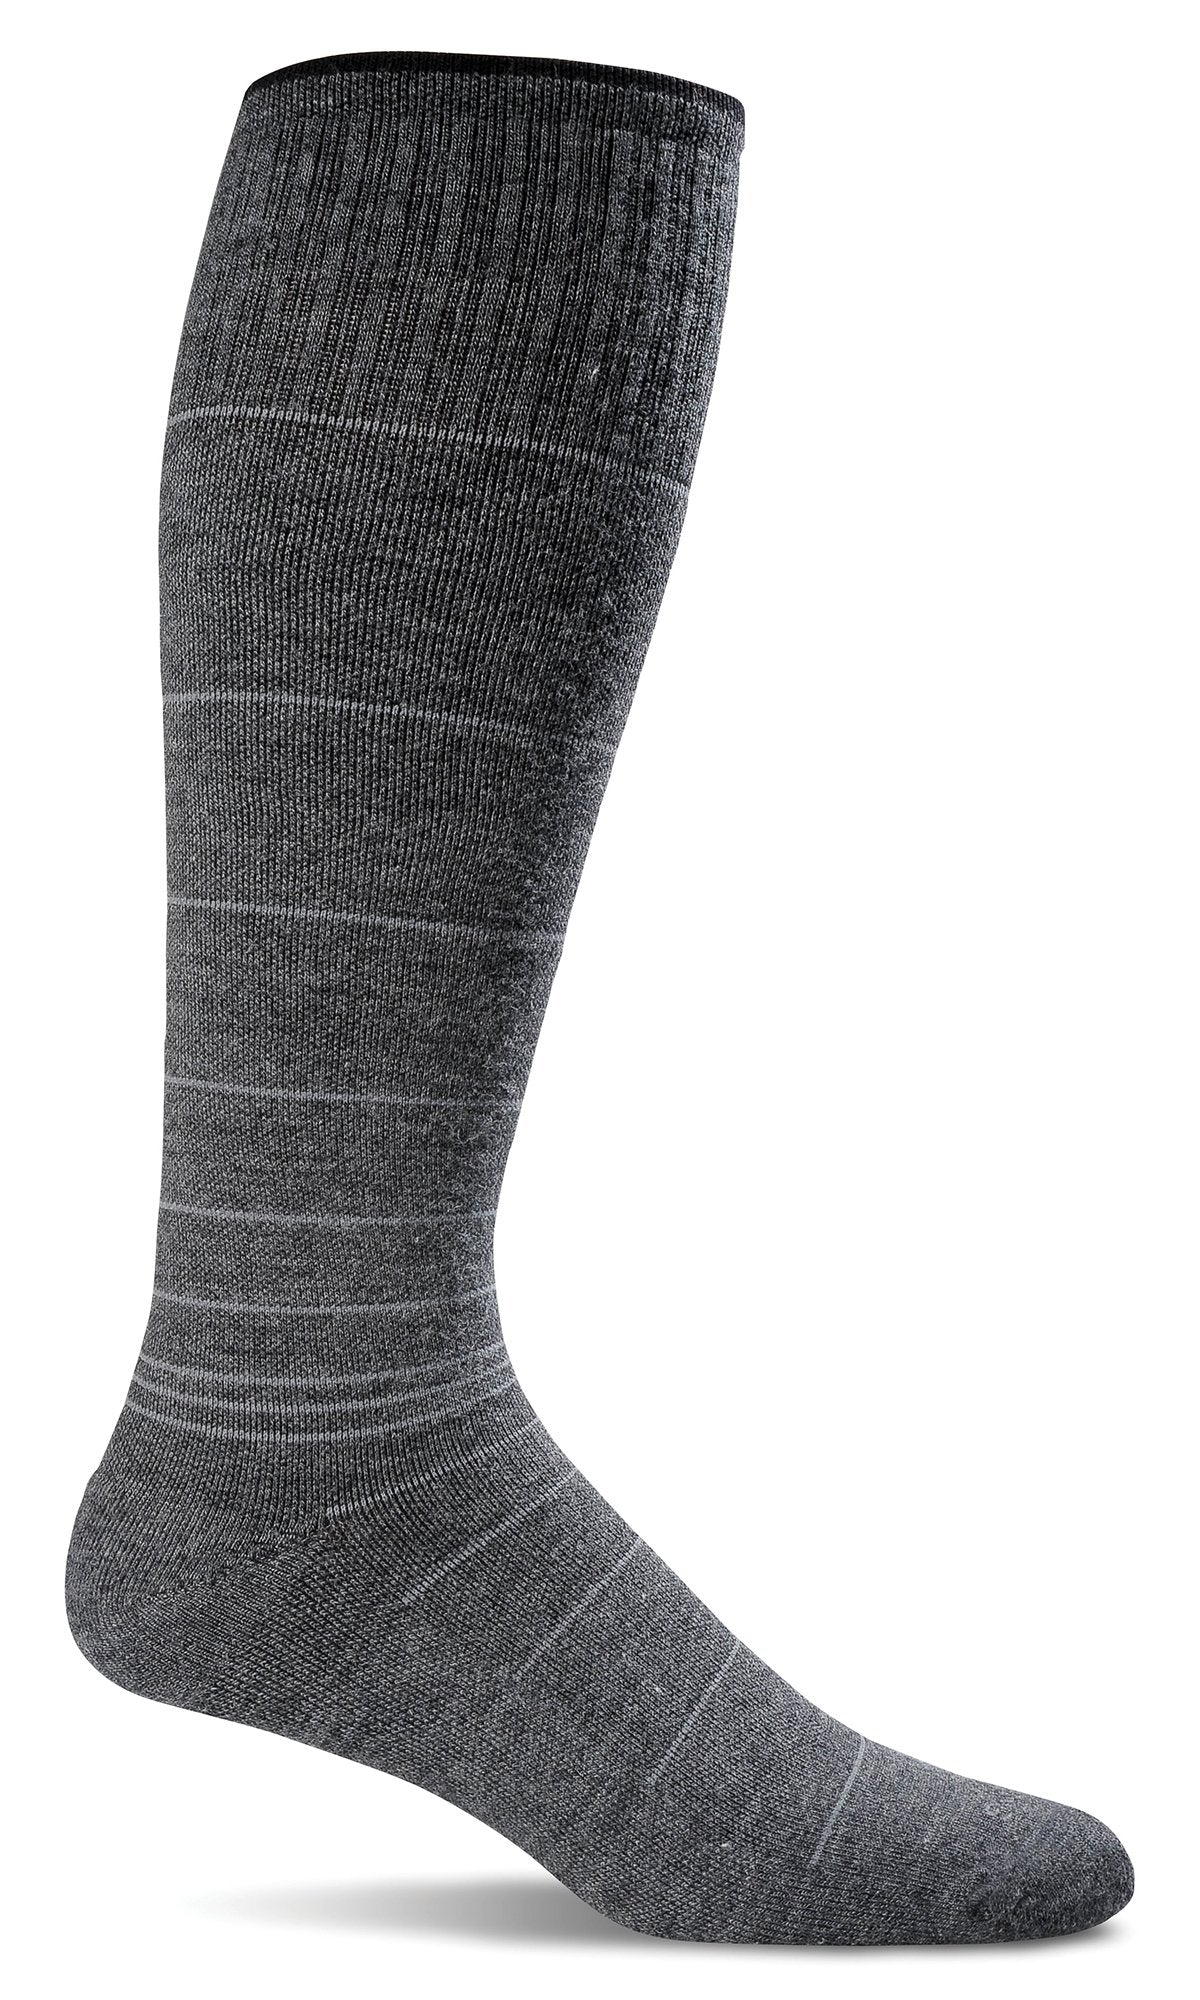 Sockwell Best-selling Men's Circulator Merino Wool Compression Socks in Navy Stripe